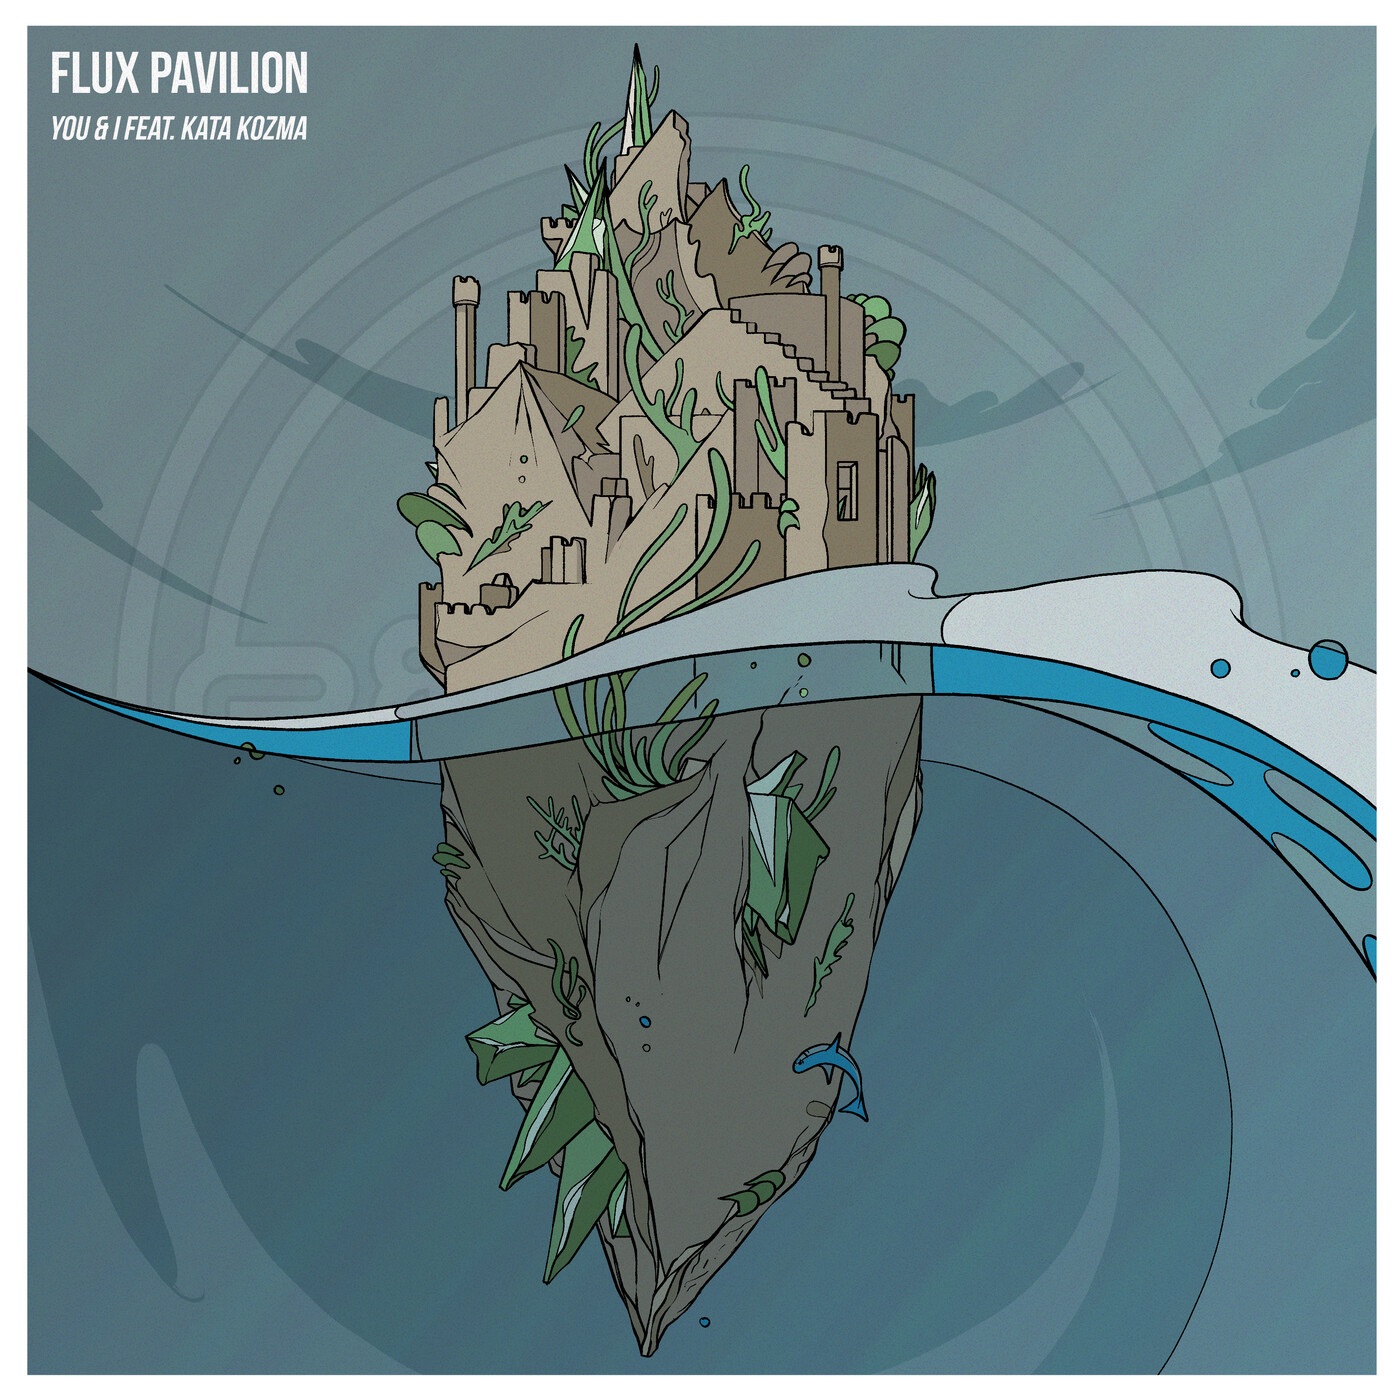 Flux Pavilion - You & I (feat. Kata Kozma) - Single